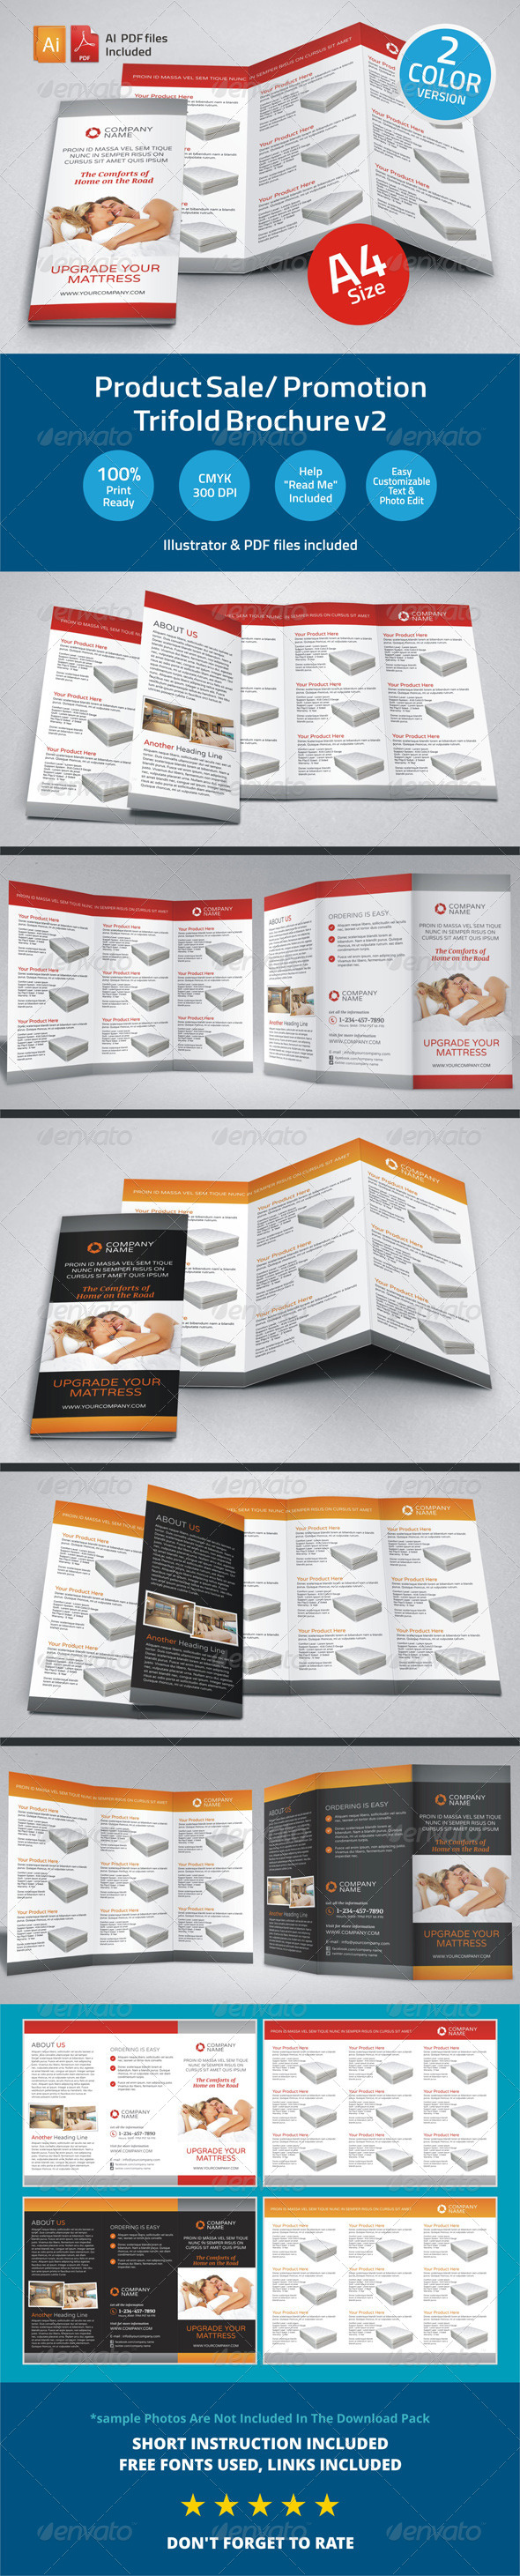 Product Sale Promotion Trifold Brochure V2 By Jbn Illa